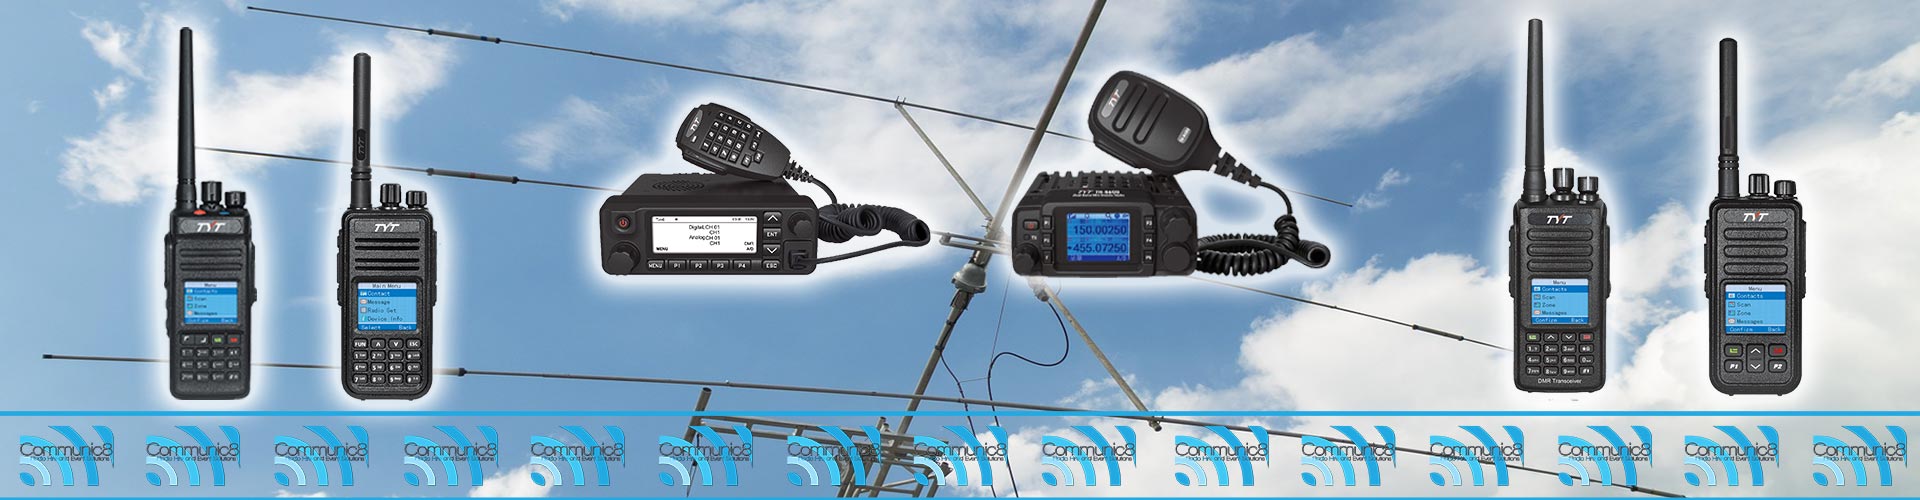 TYT Two Way Radios for Radio Amateurs